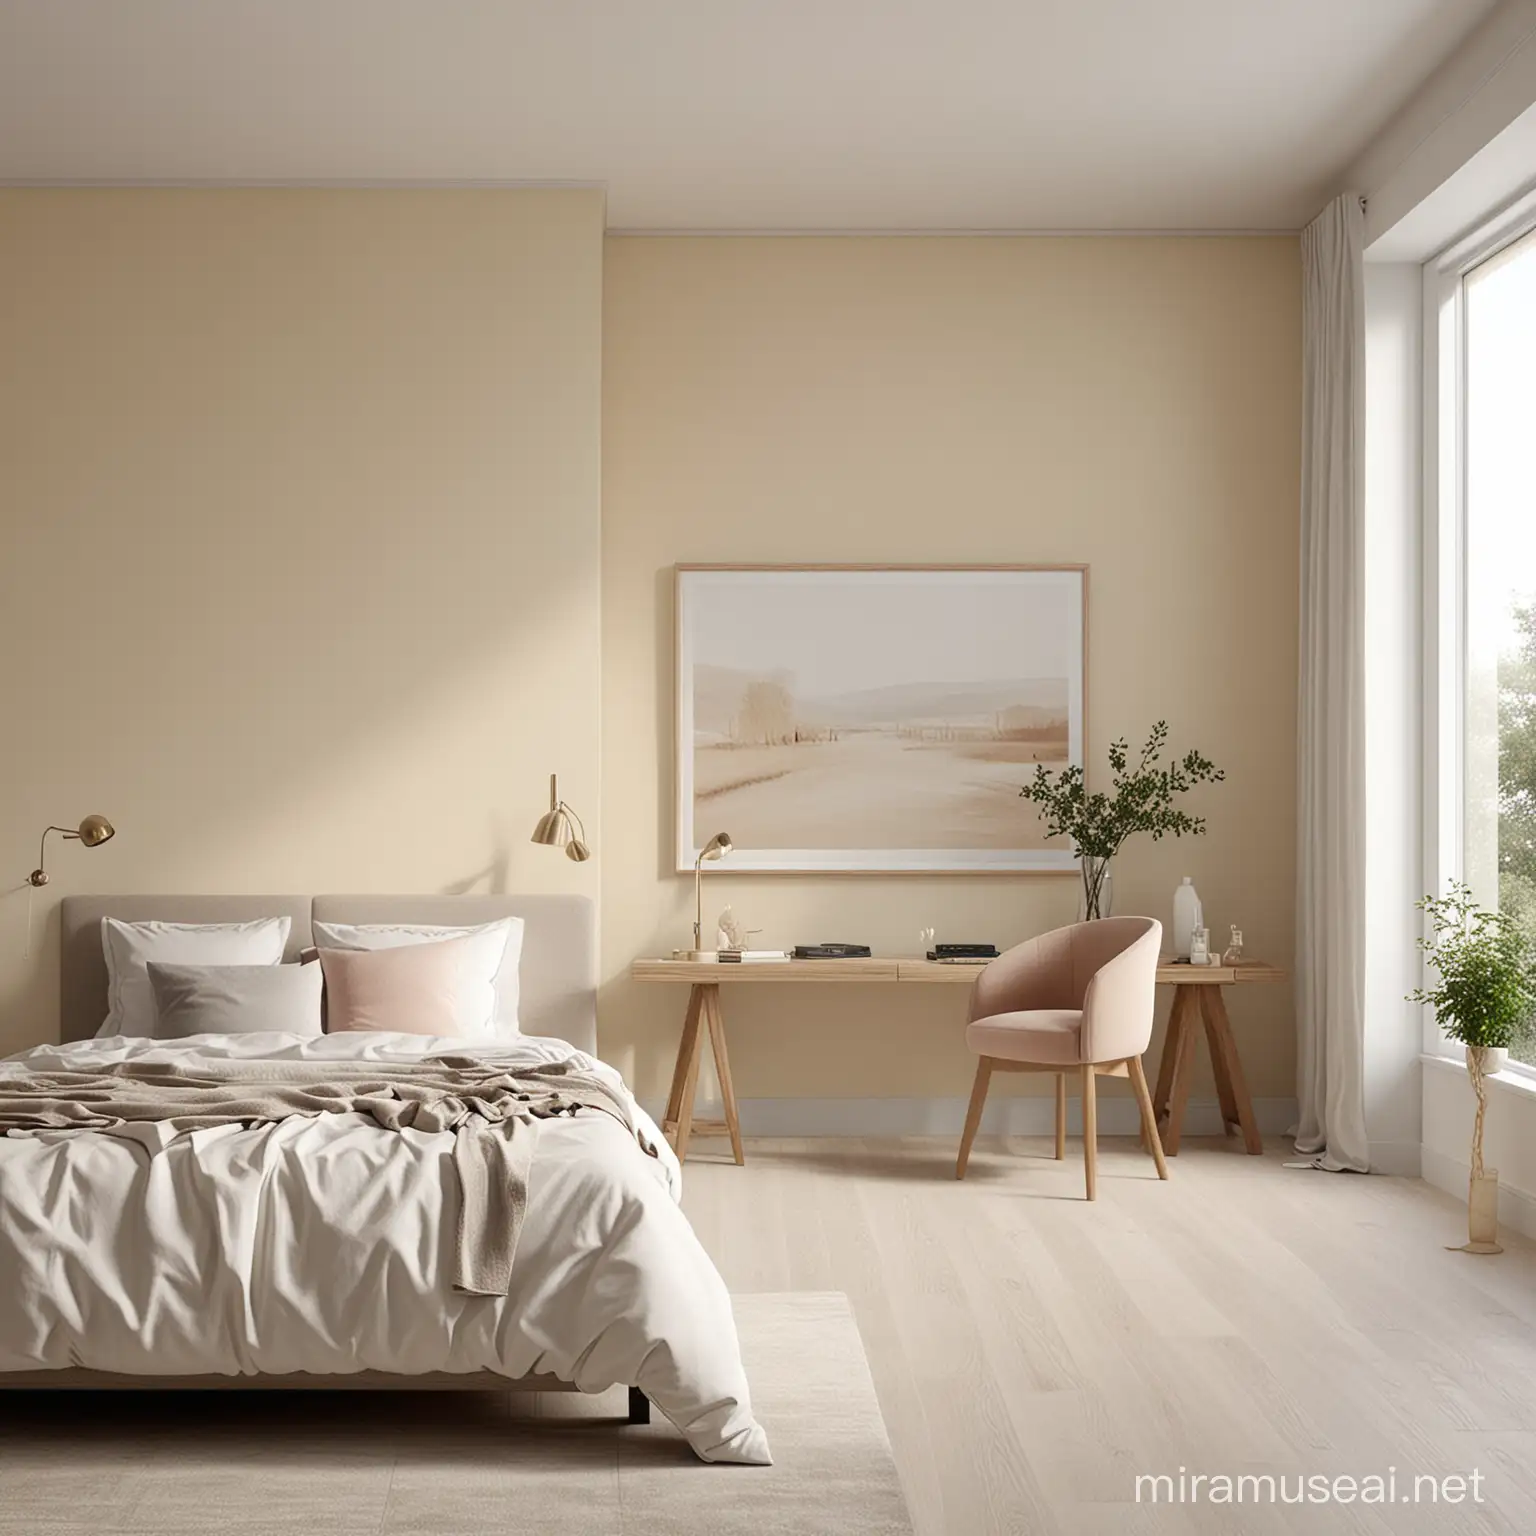 Bohemian Light Colors Bedroom Mockup for Interior Design Inspiration